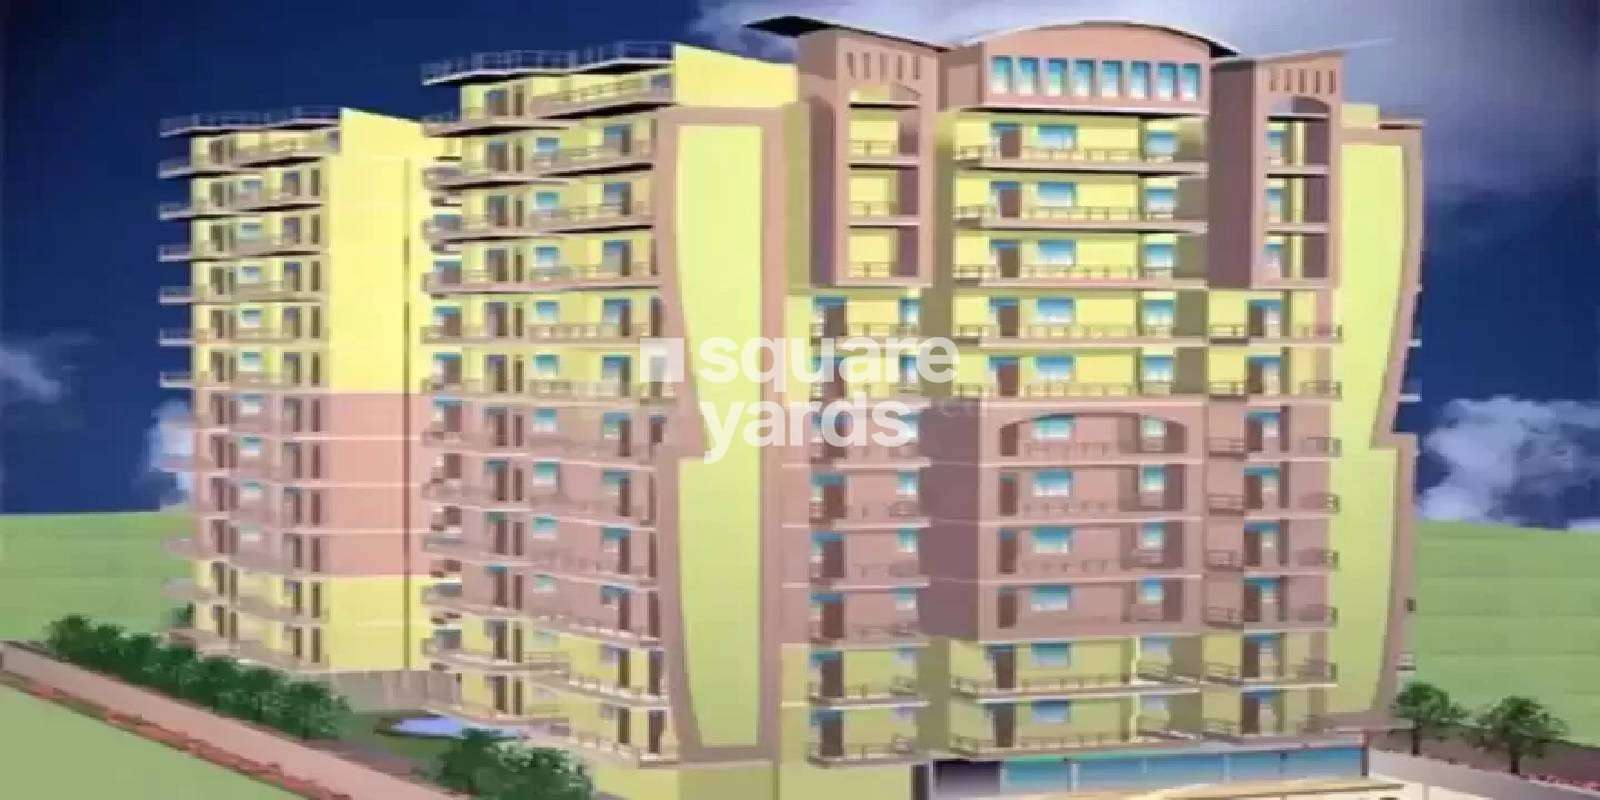 Amarpali Apartment Cover Image